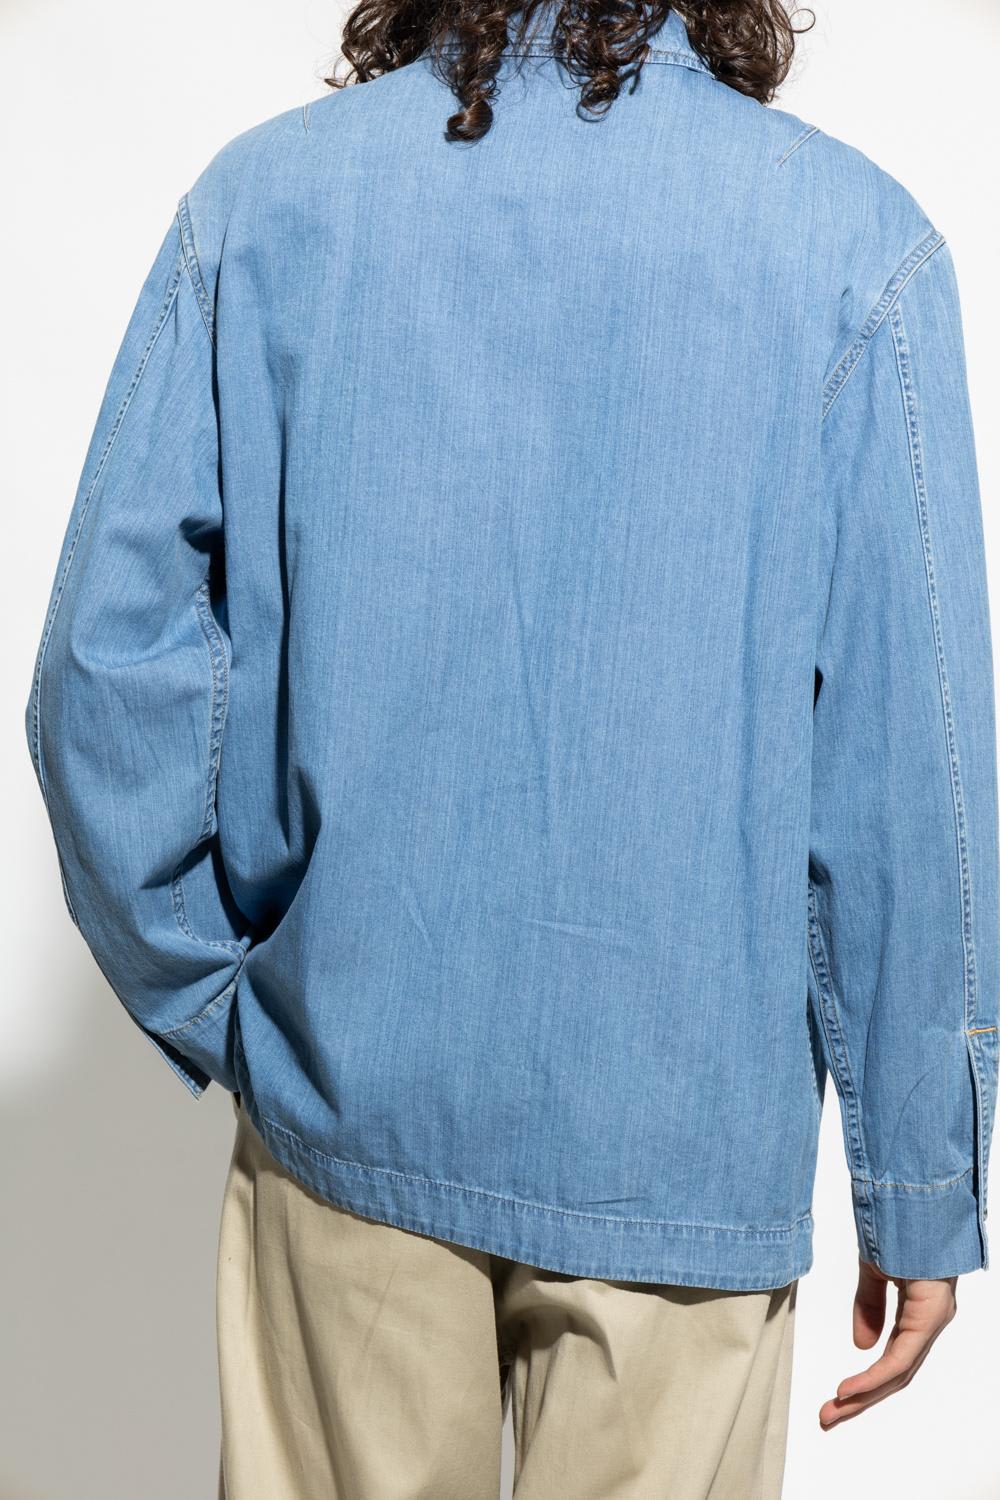 Shop Lanvin Denim Shirt In Light Blue